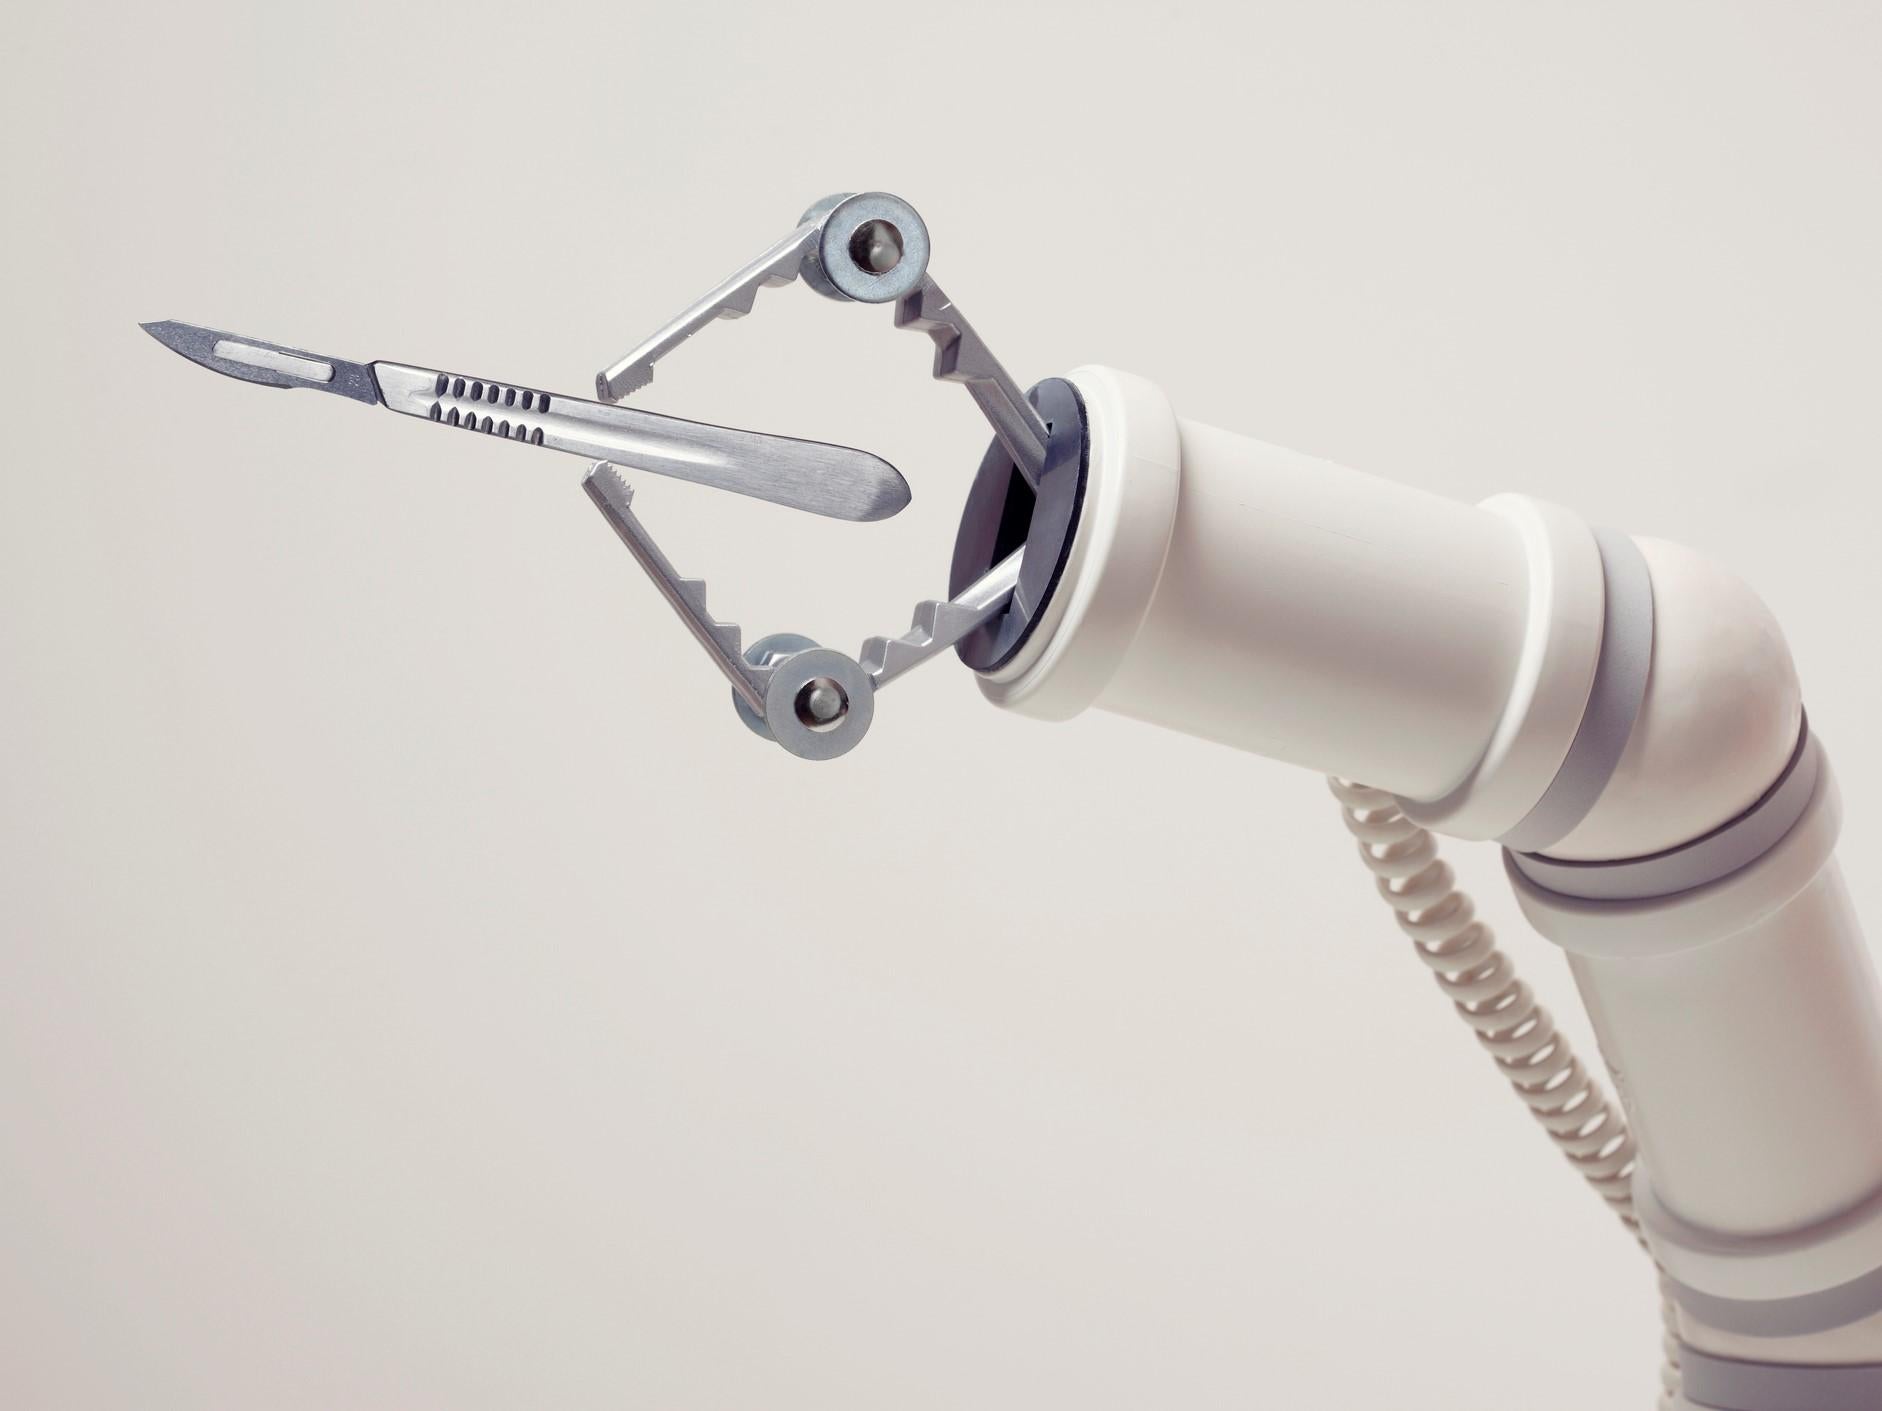 A robotic arm with a scalpel